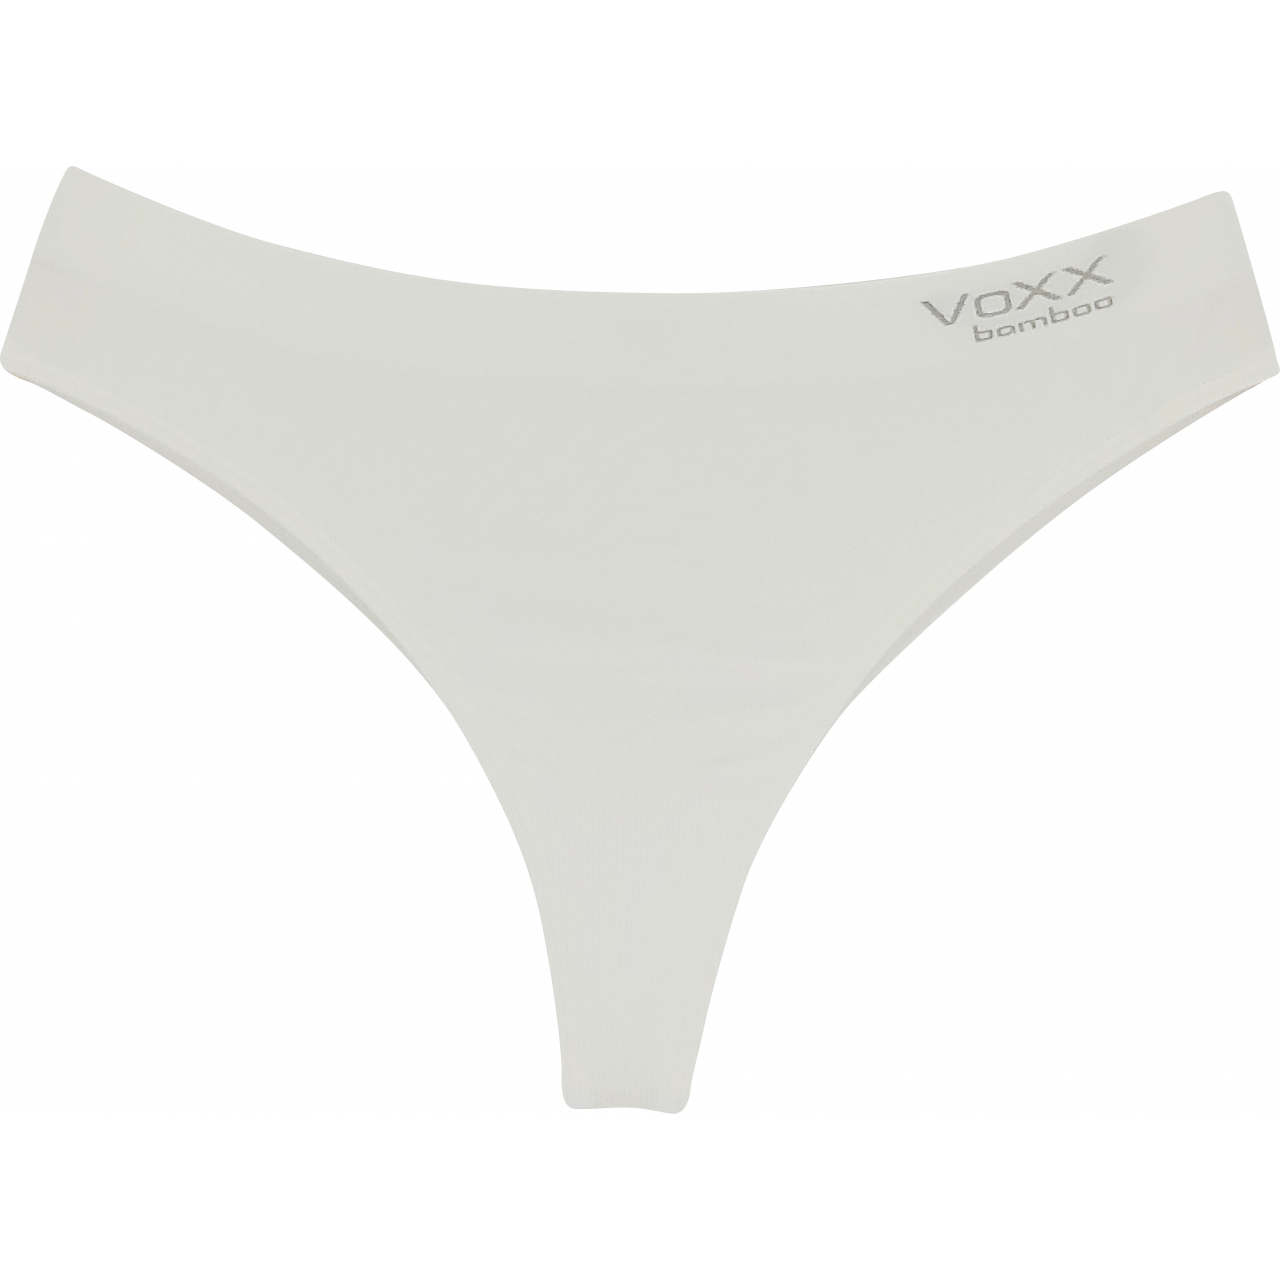 Kalhotky dámské Voxx BambooSeamless 006 - bílé, L/XL